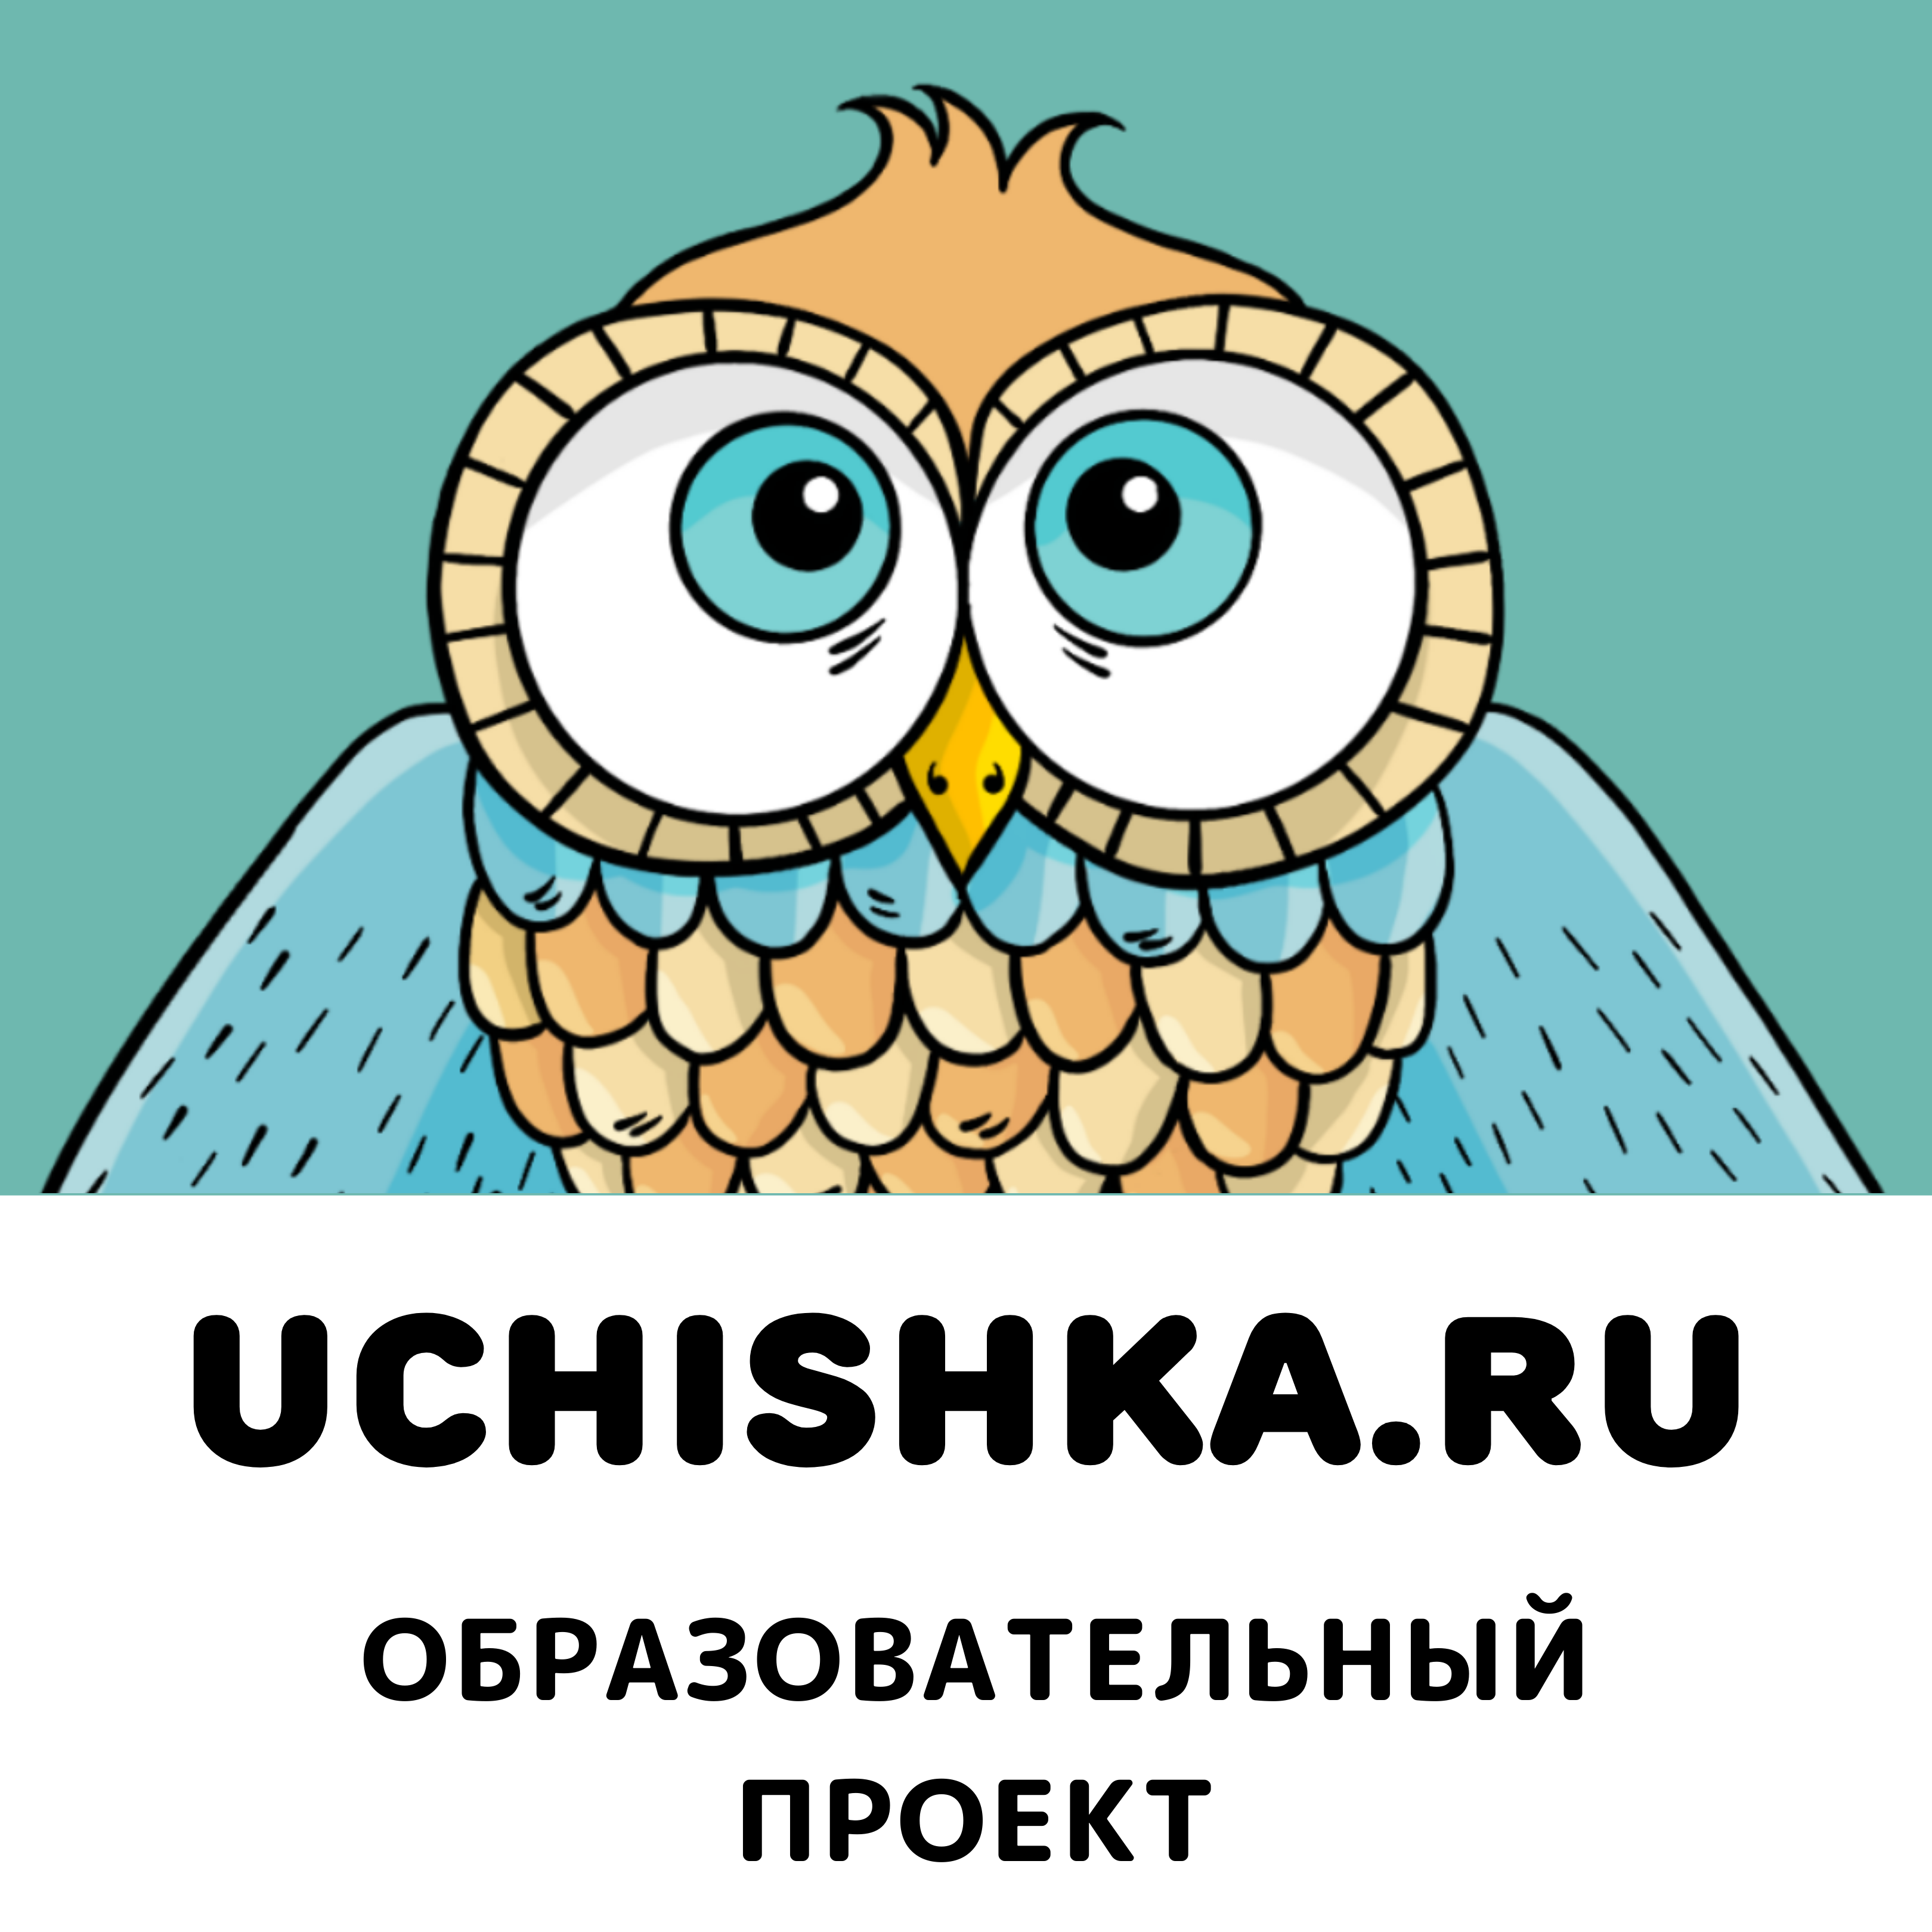 uchishka.ru